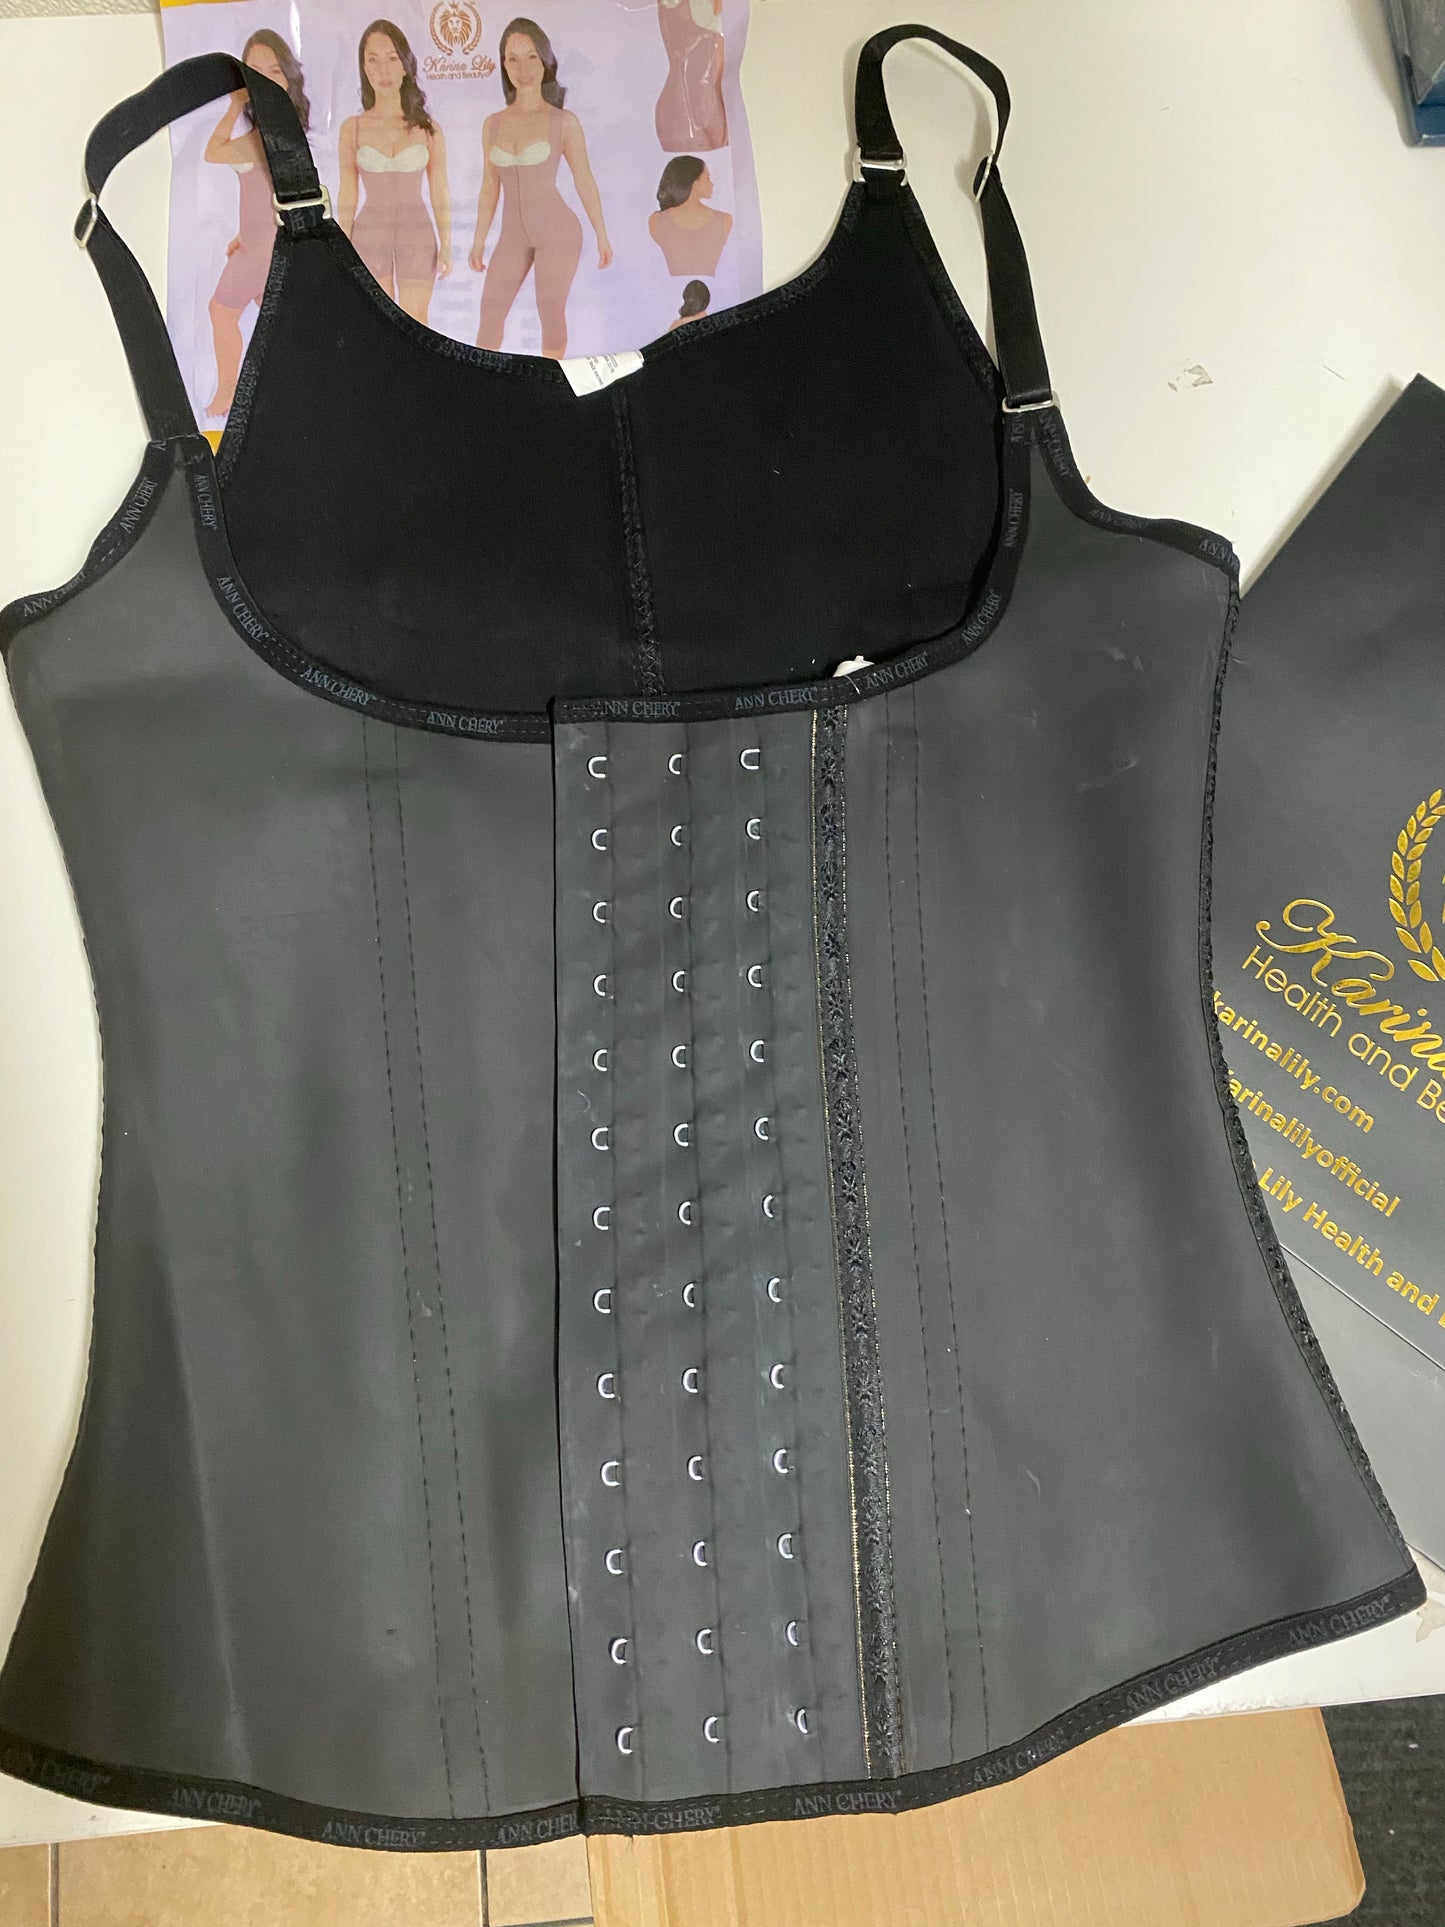 Vest Waist trainer with Adjustable Straps